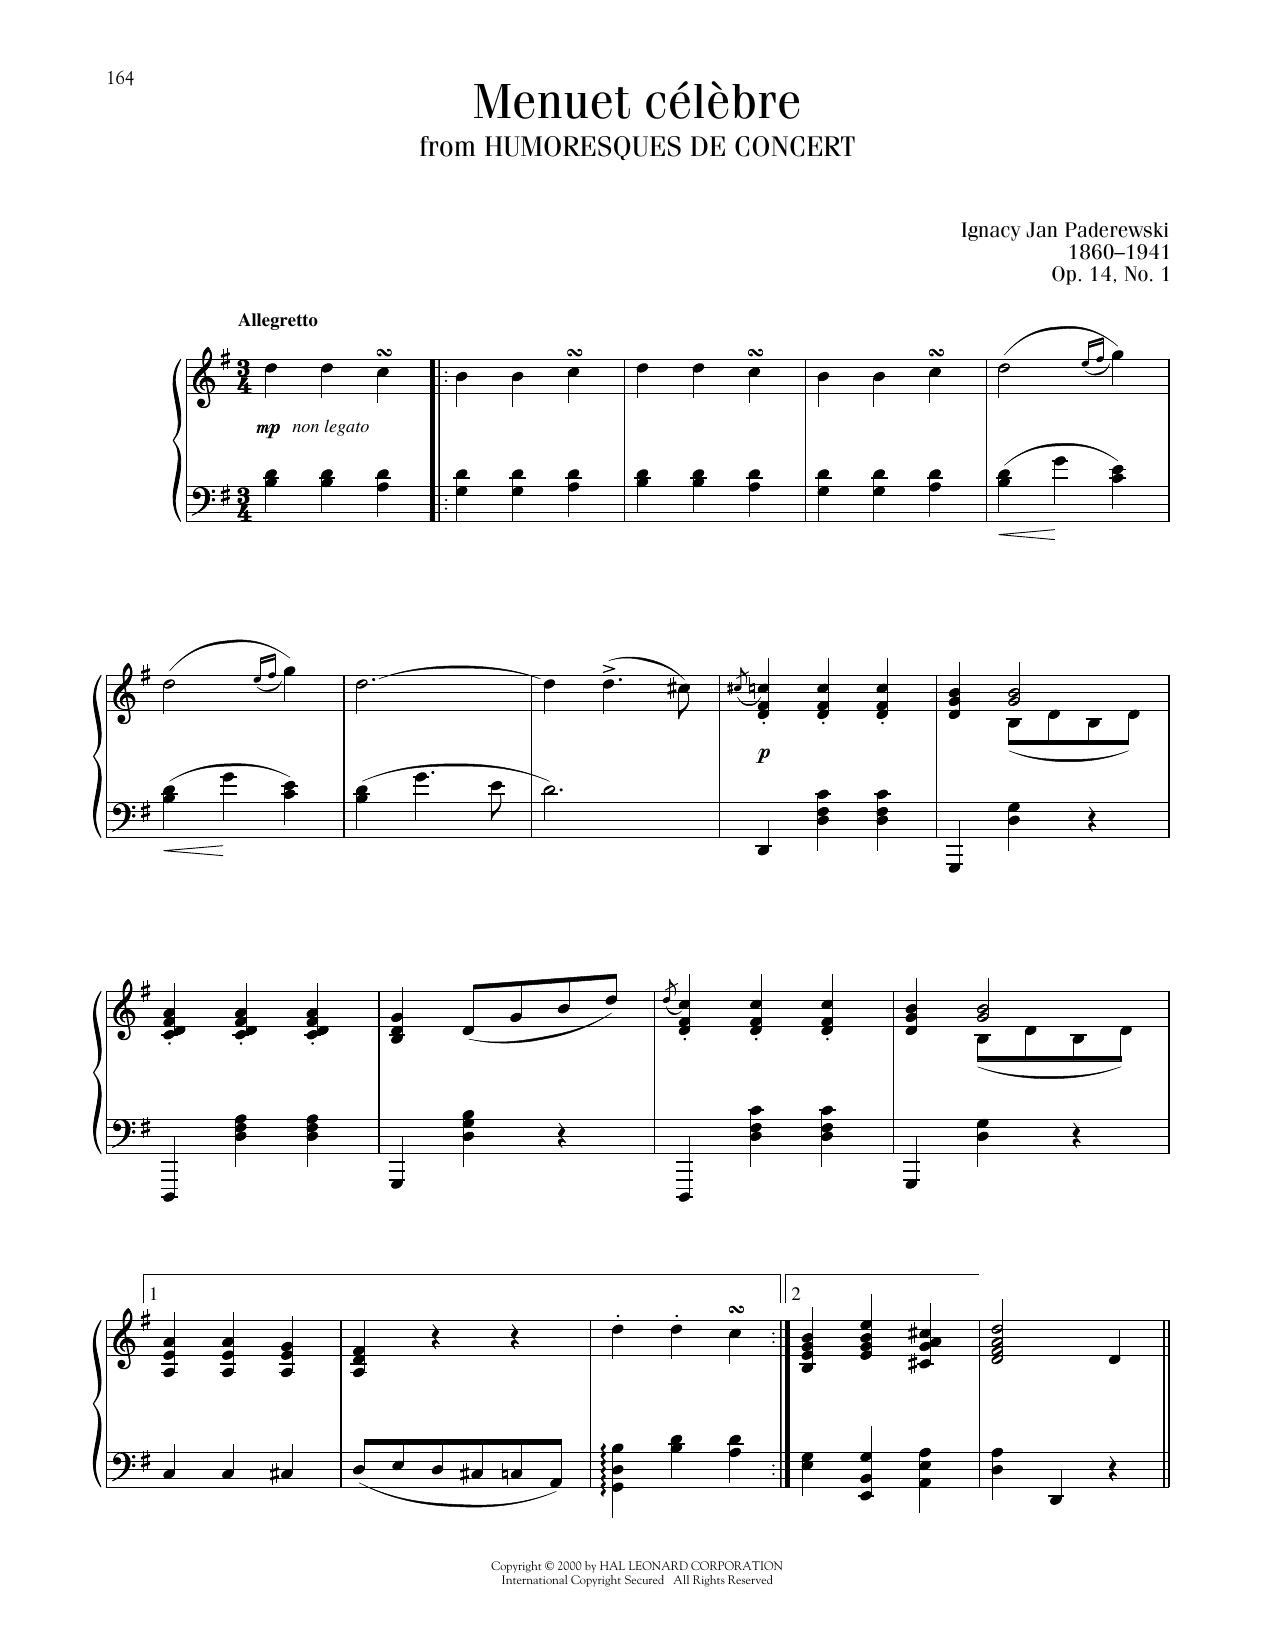 Ignacy Jan Paderewski Minuet In G (Menuet) Sheet Music Notes & Chords for Educational Piano - Download or Print PDF